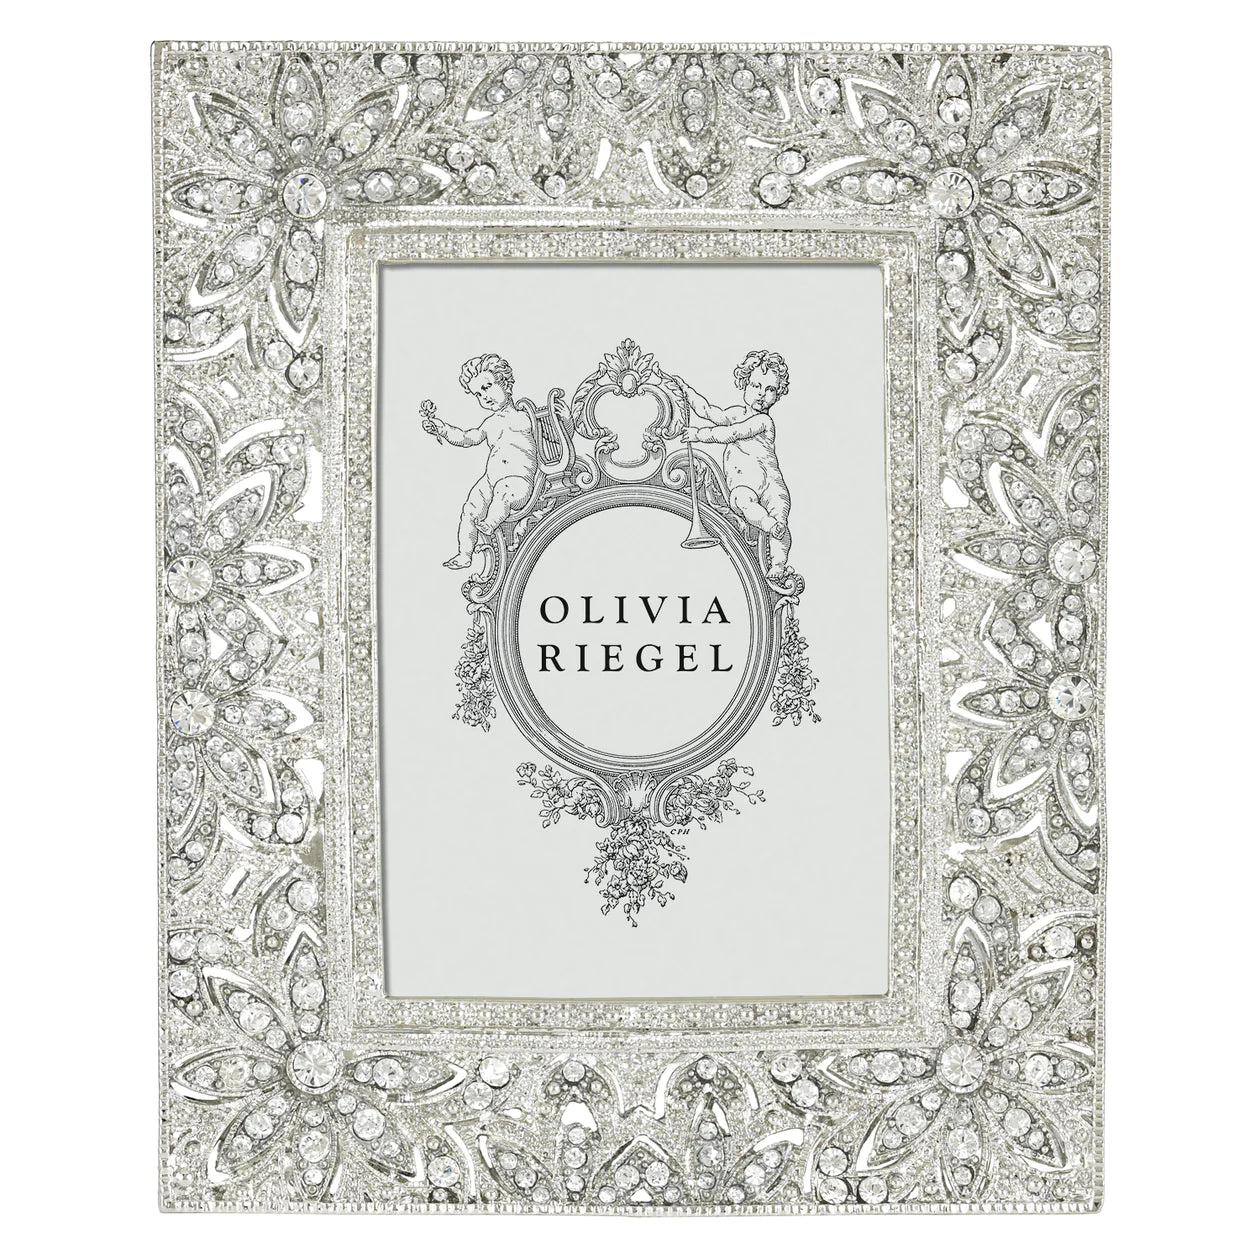 Olivia Riegel Silver Windsor Frame 5" x 7" Beautiful Classic Design Home Decor